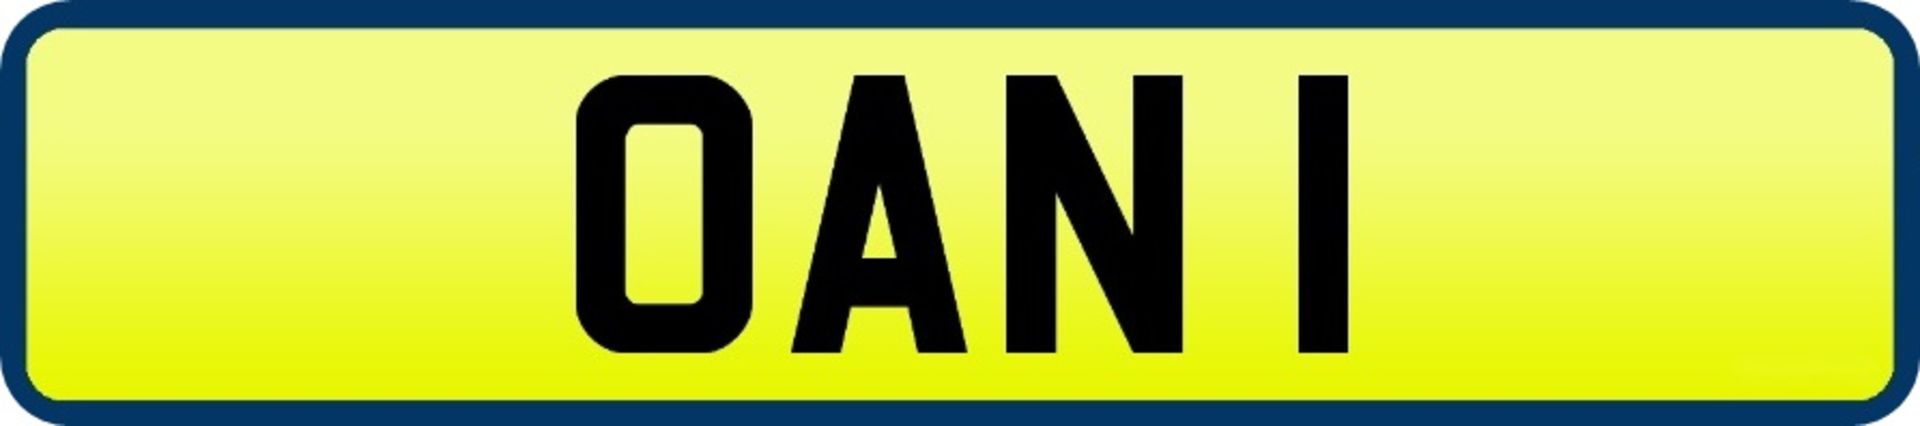 1 x Private Vehicle Registration Car Plate - OAN 1 - CL590 - Location: Altrincham WA14